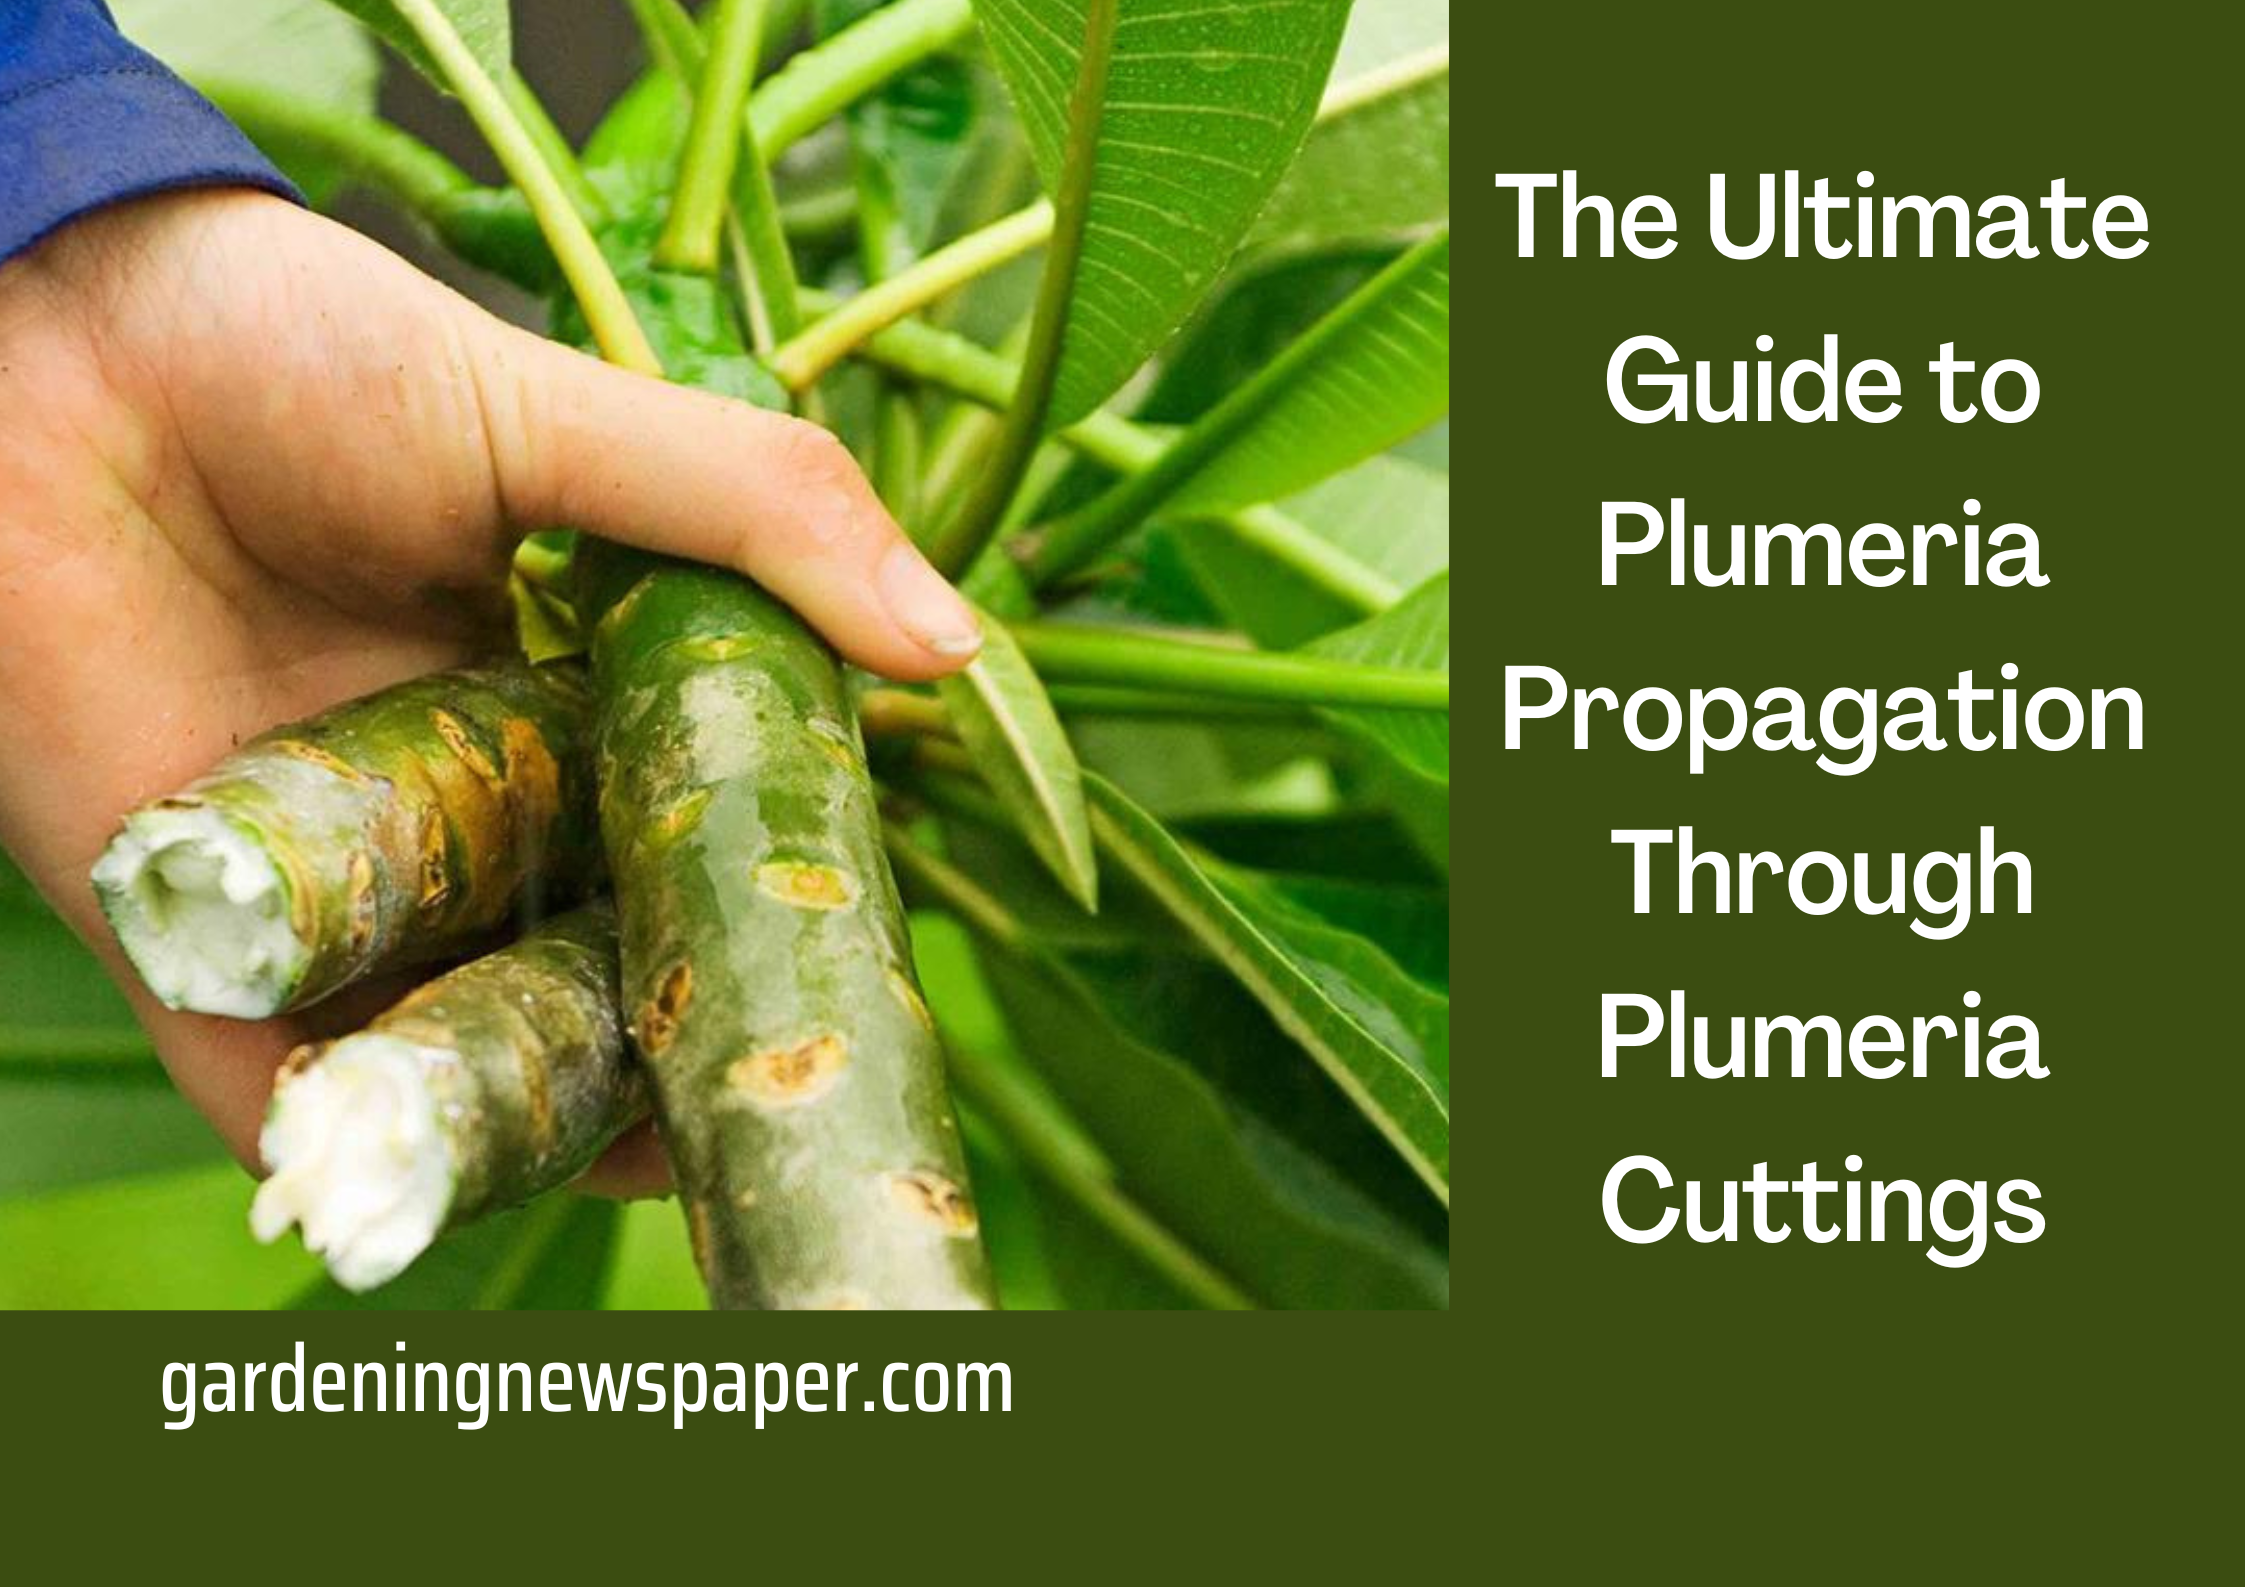 The Ultimate Guide to Plumeria Propagation Through Plumeria Cuttings